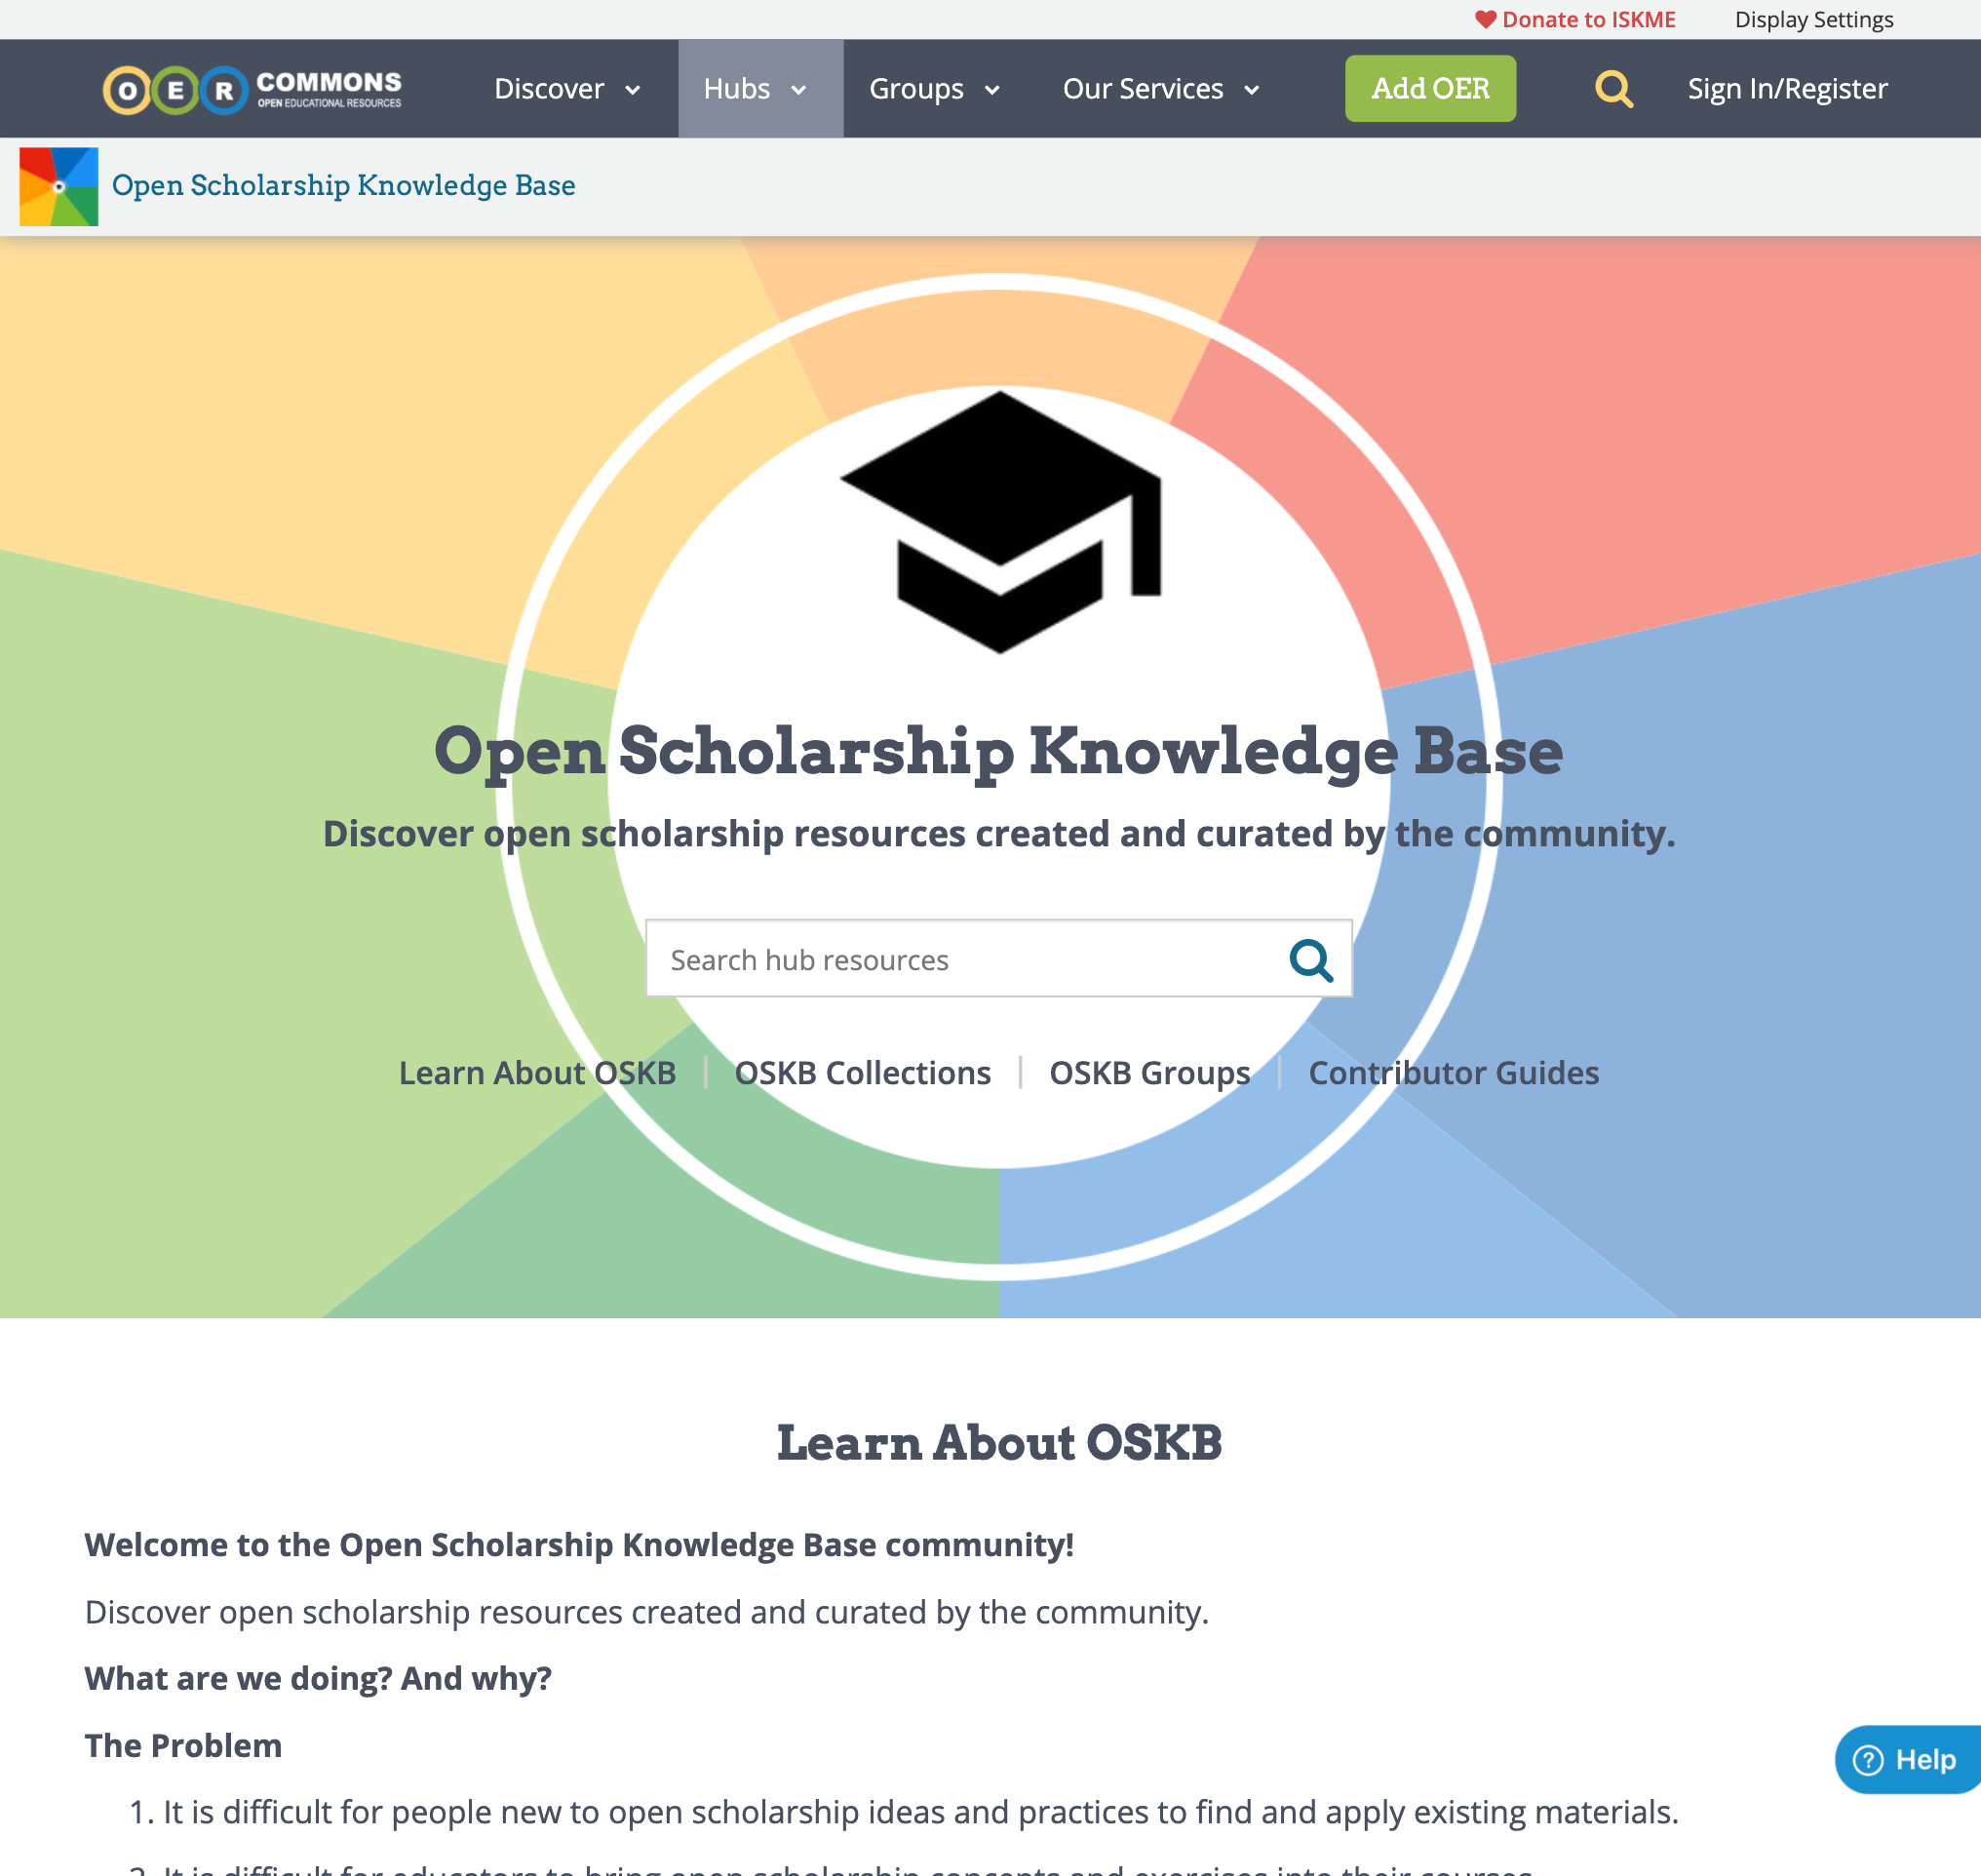 Open Scholarship Knowledge Base